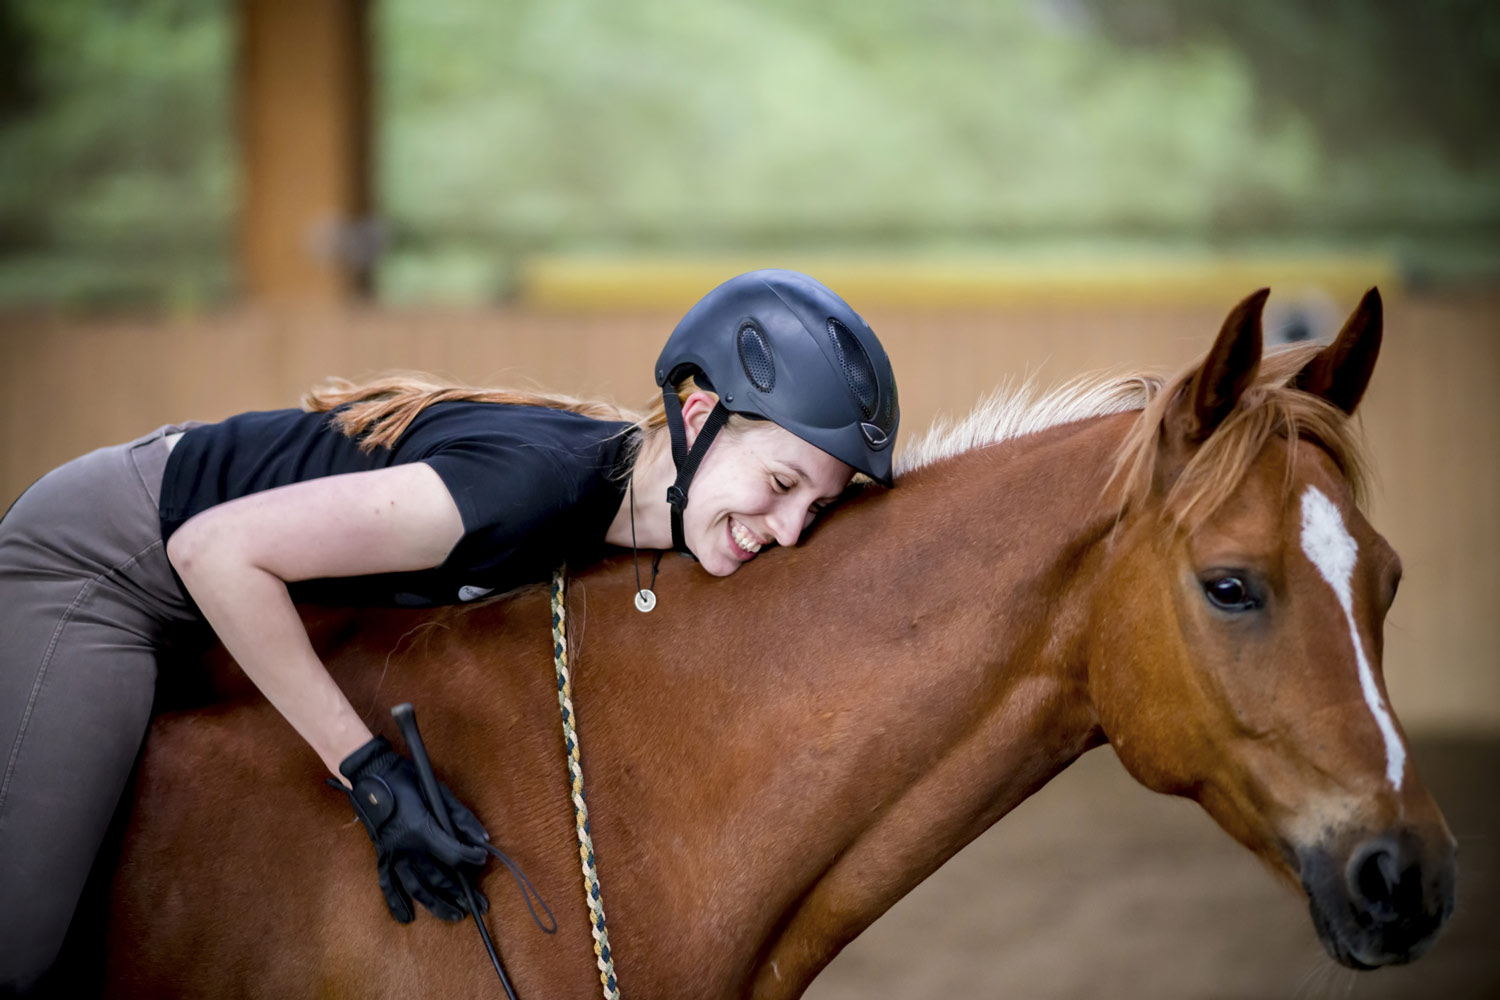 Share the Benefits of Horseback Riding